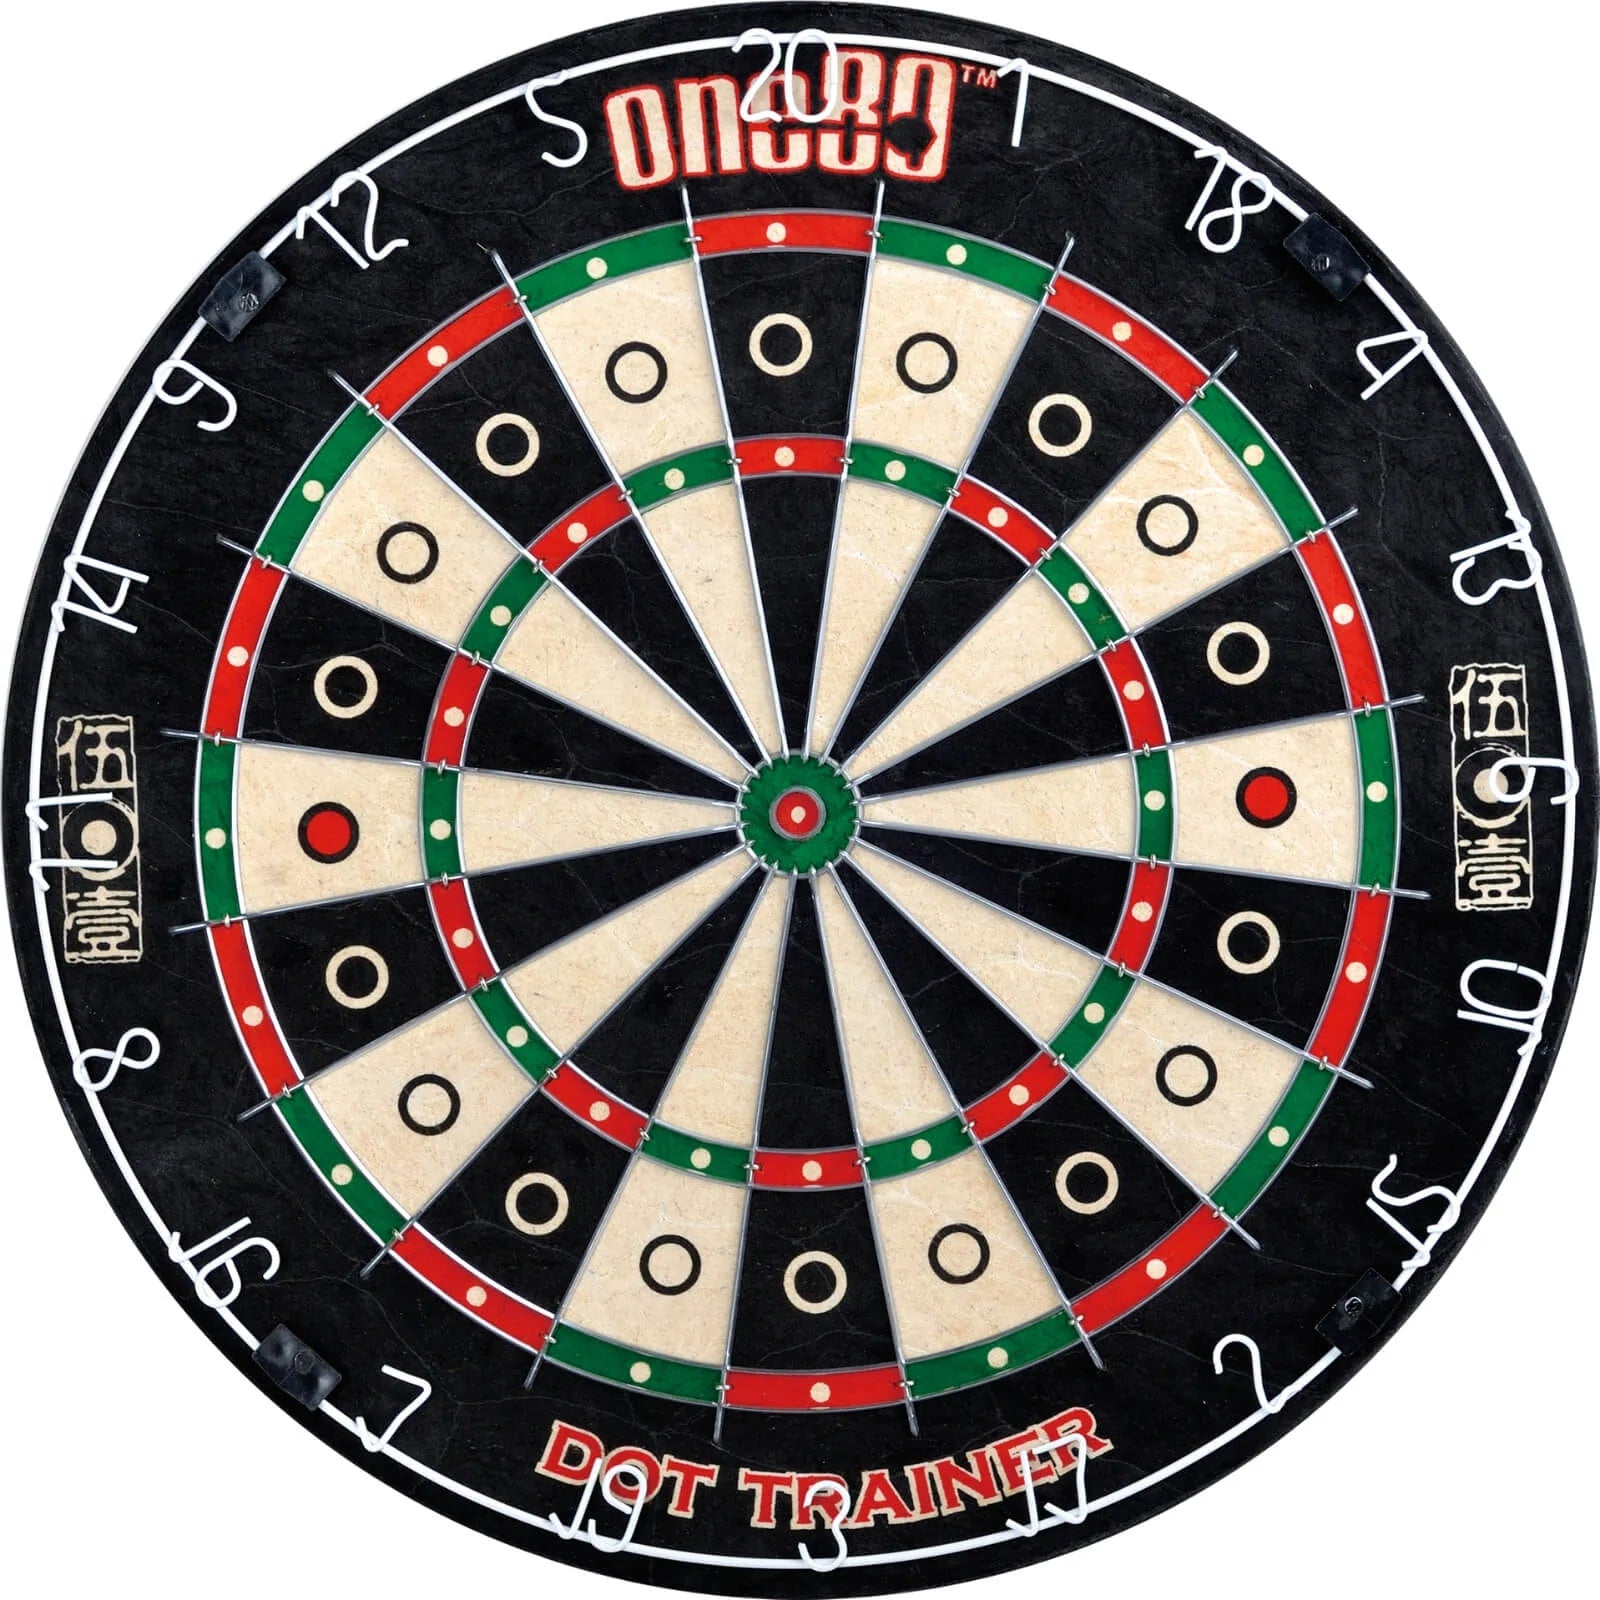 ONE80 Dot Trainer Skills Training Dartboard - Darts Direct